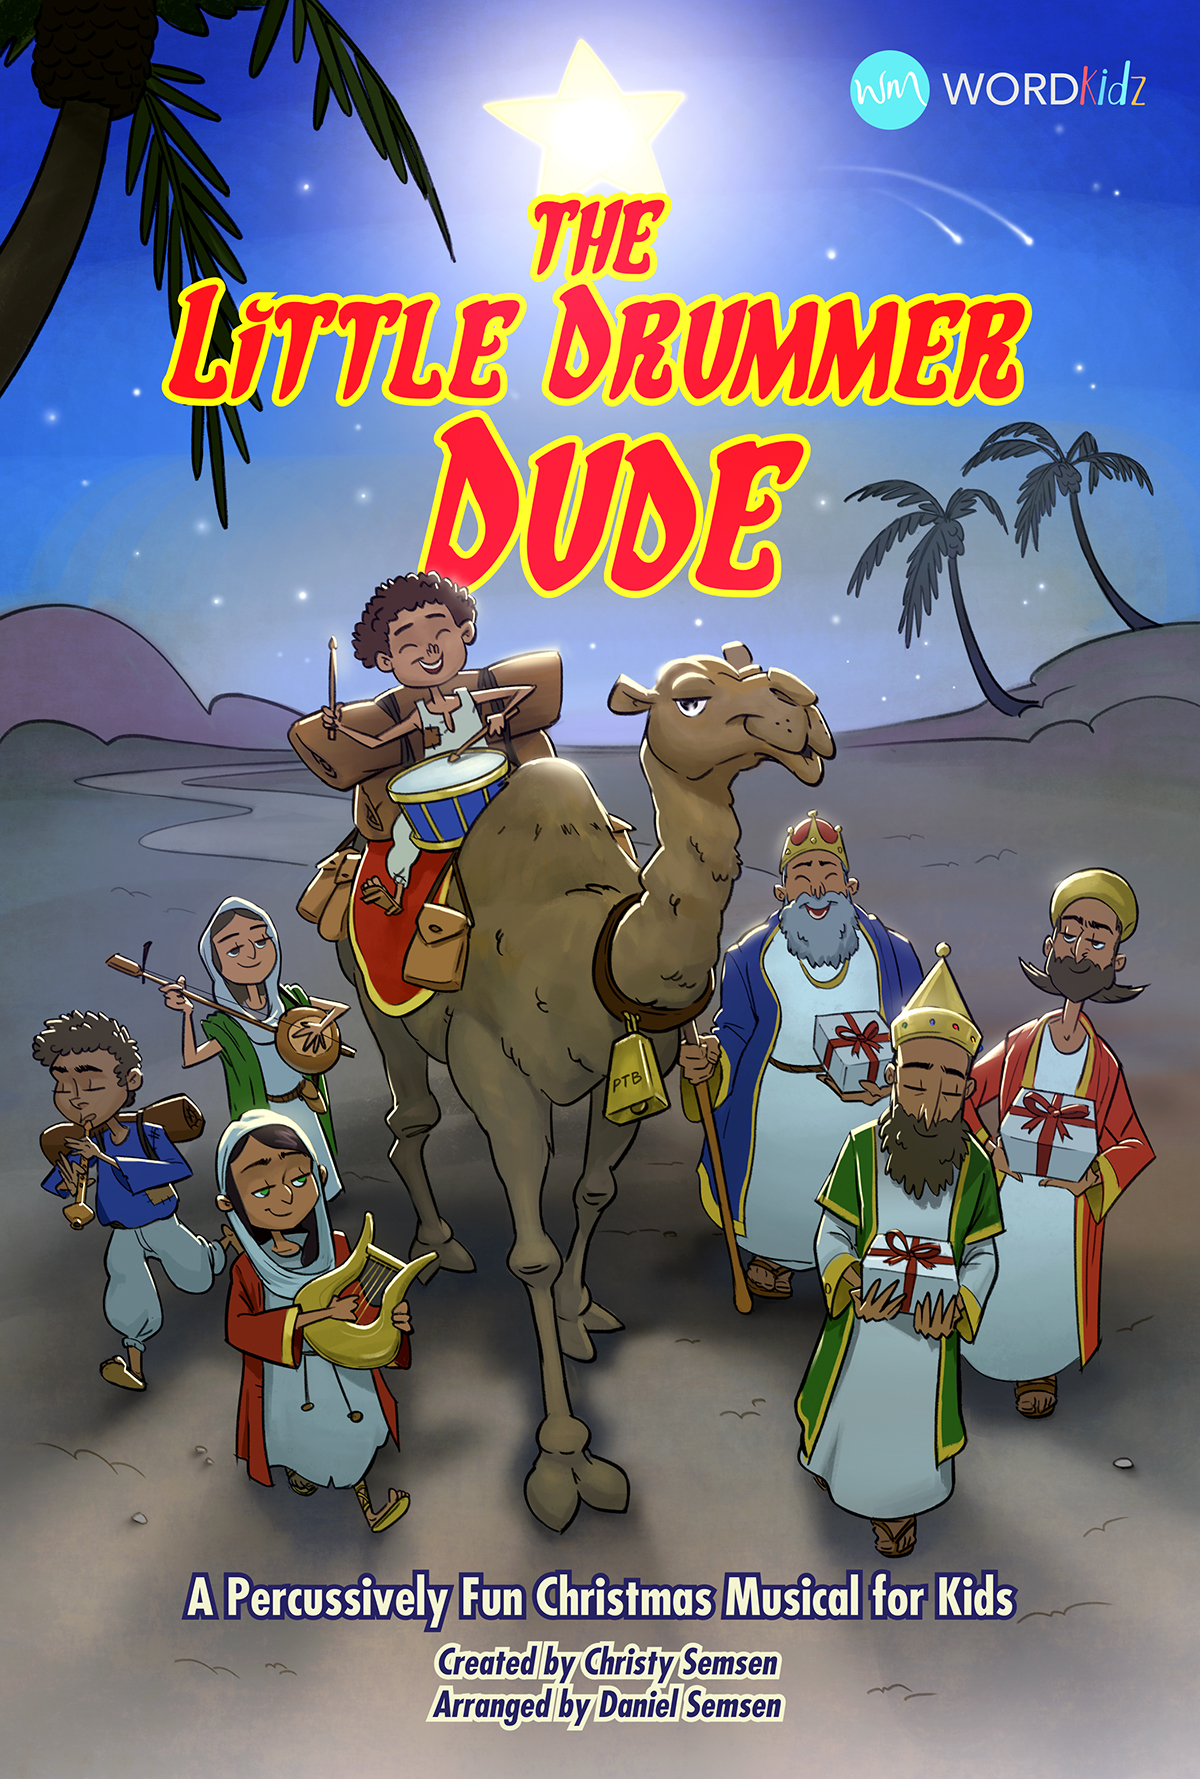 The Little Drummer Dude